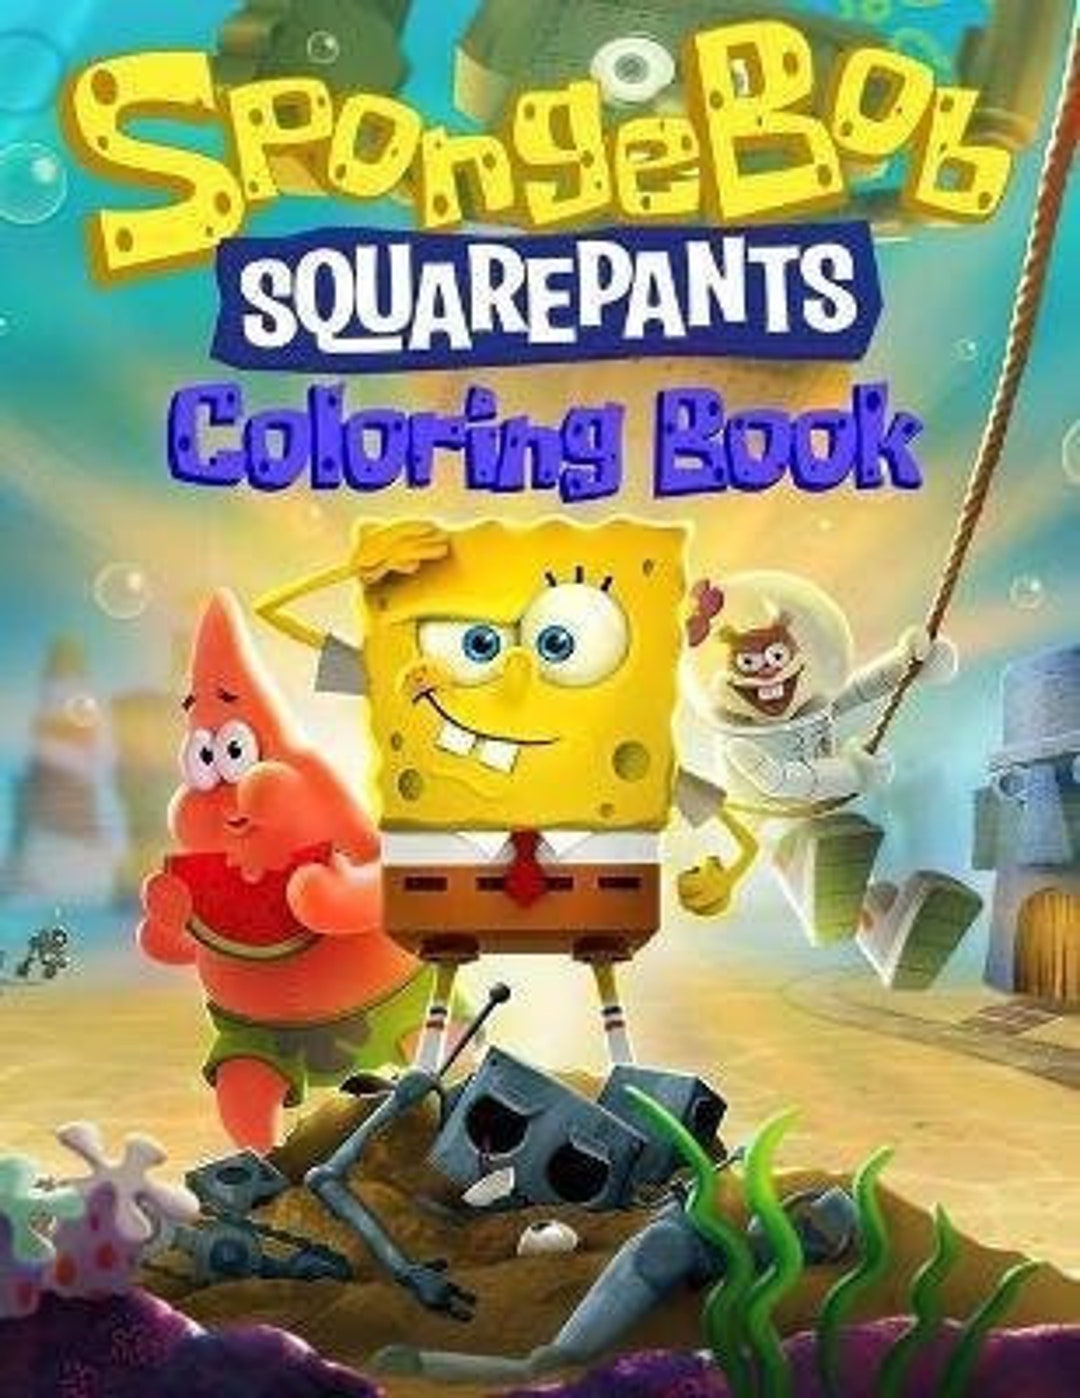 Spongebob Coloring Pages (100% Free Printables)